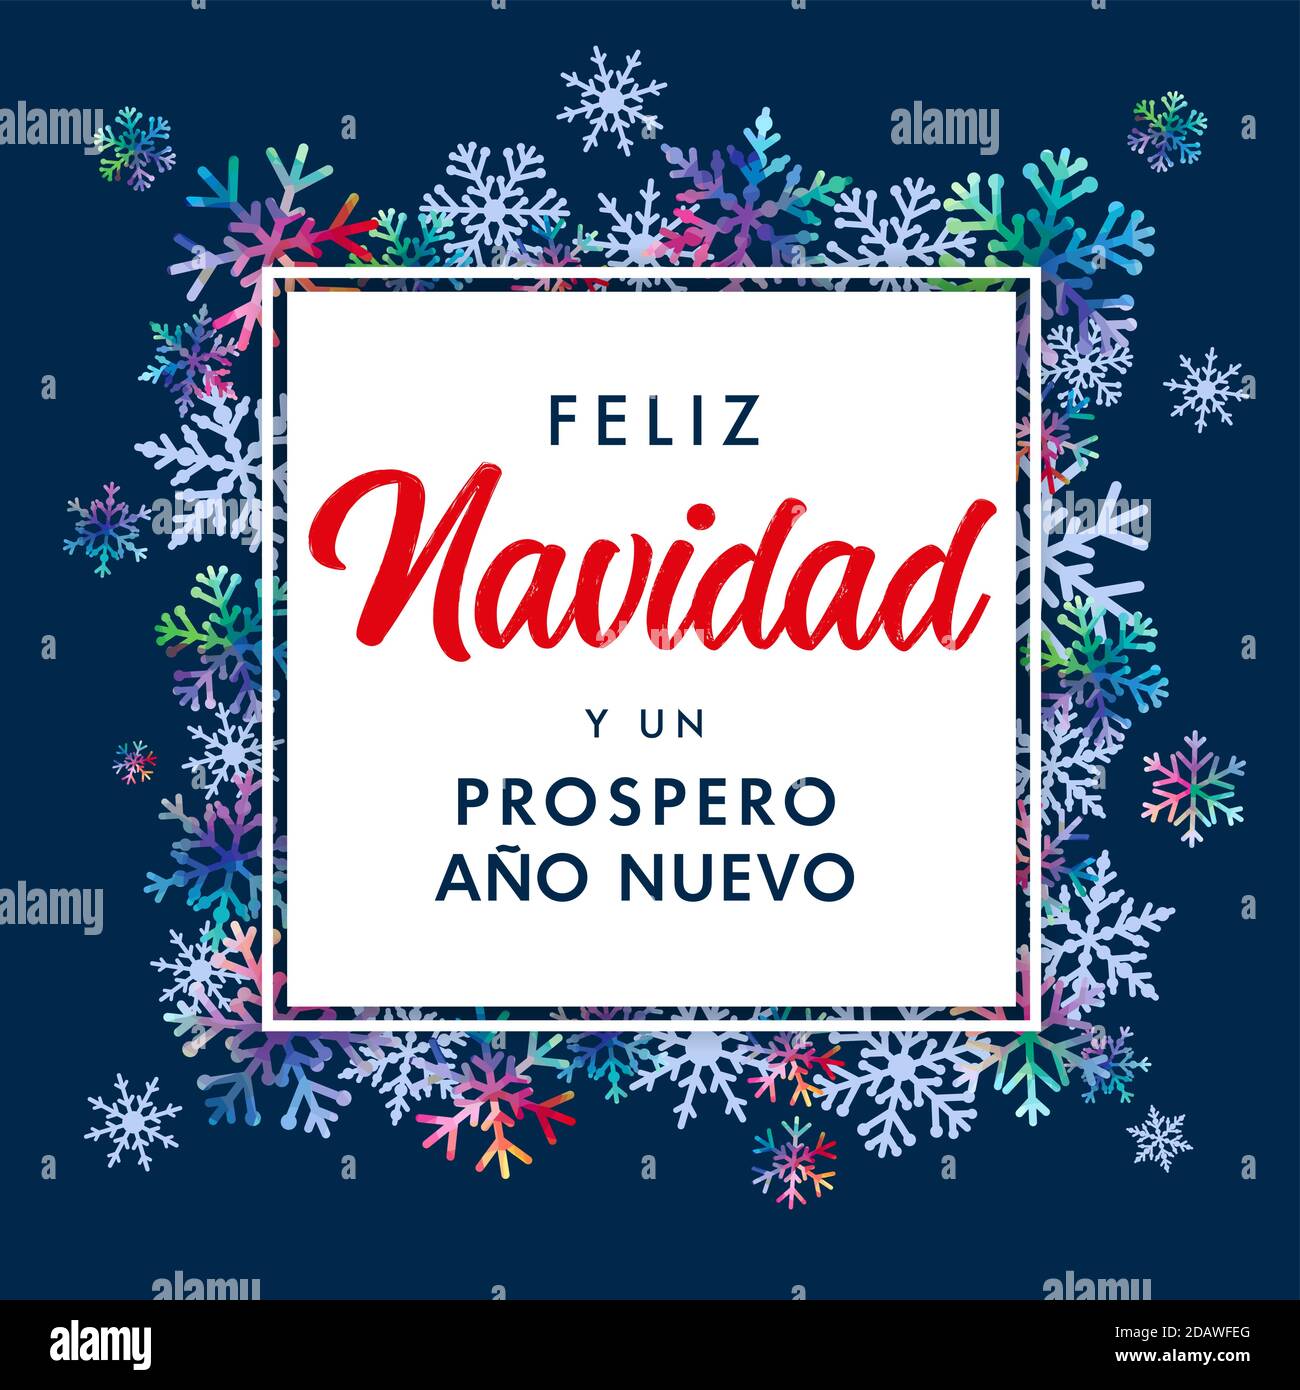 Feliz Navidad Spanish Text Prospero Ano Nuevo Translate Merry Christmas And Happy New Year Vector Xmas Greeting For Happy New Year In Spain Of Wi Stock Vector Image Art Alamy